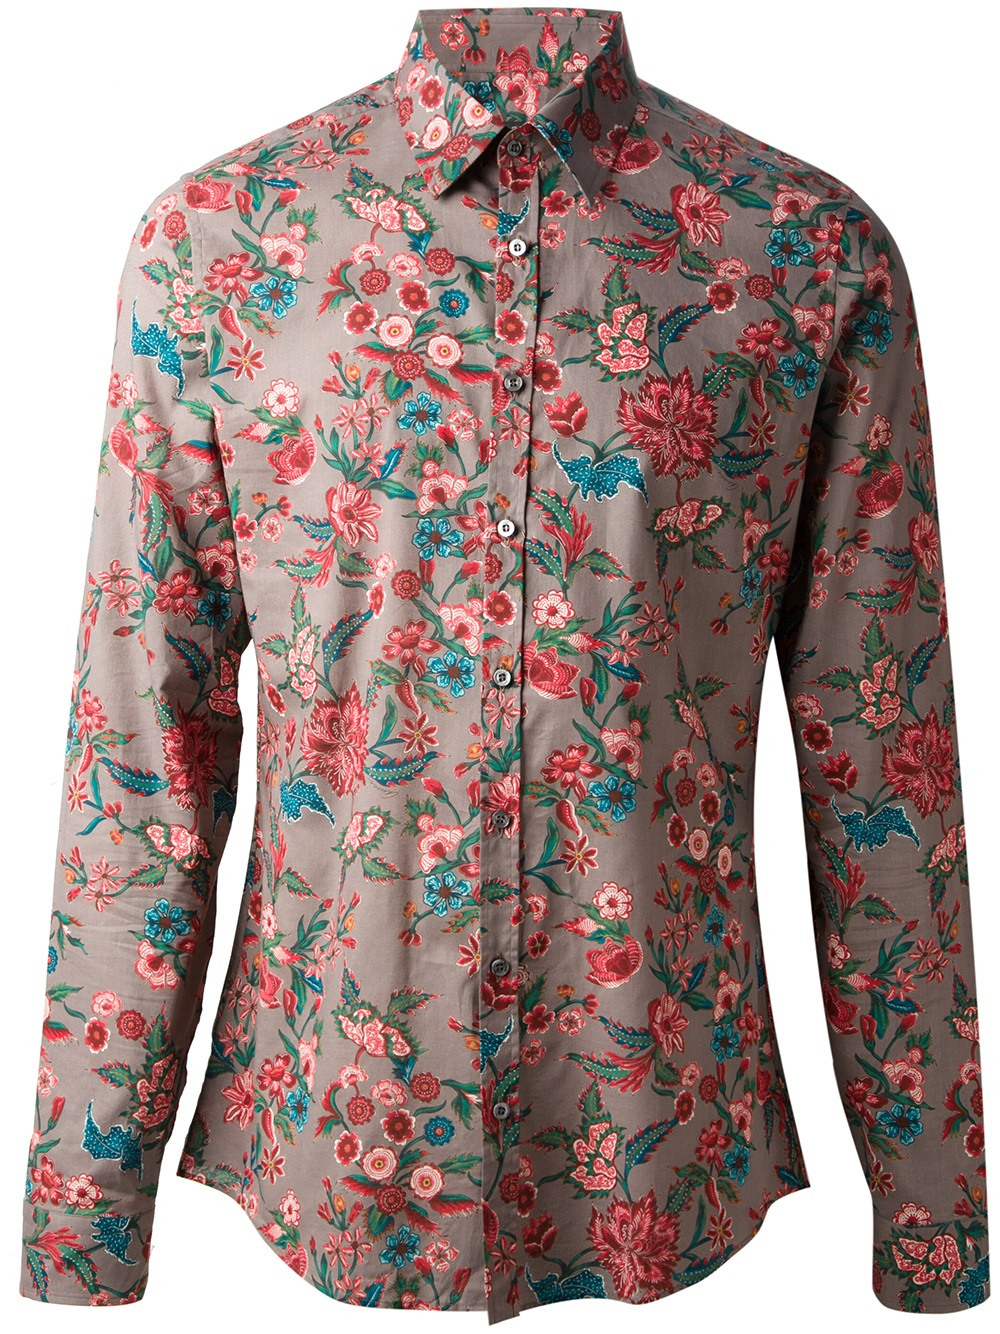 Gucci Floral Print Shirt for Men - Lyst